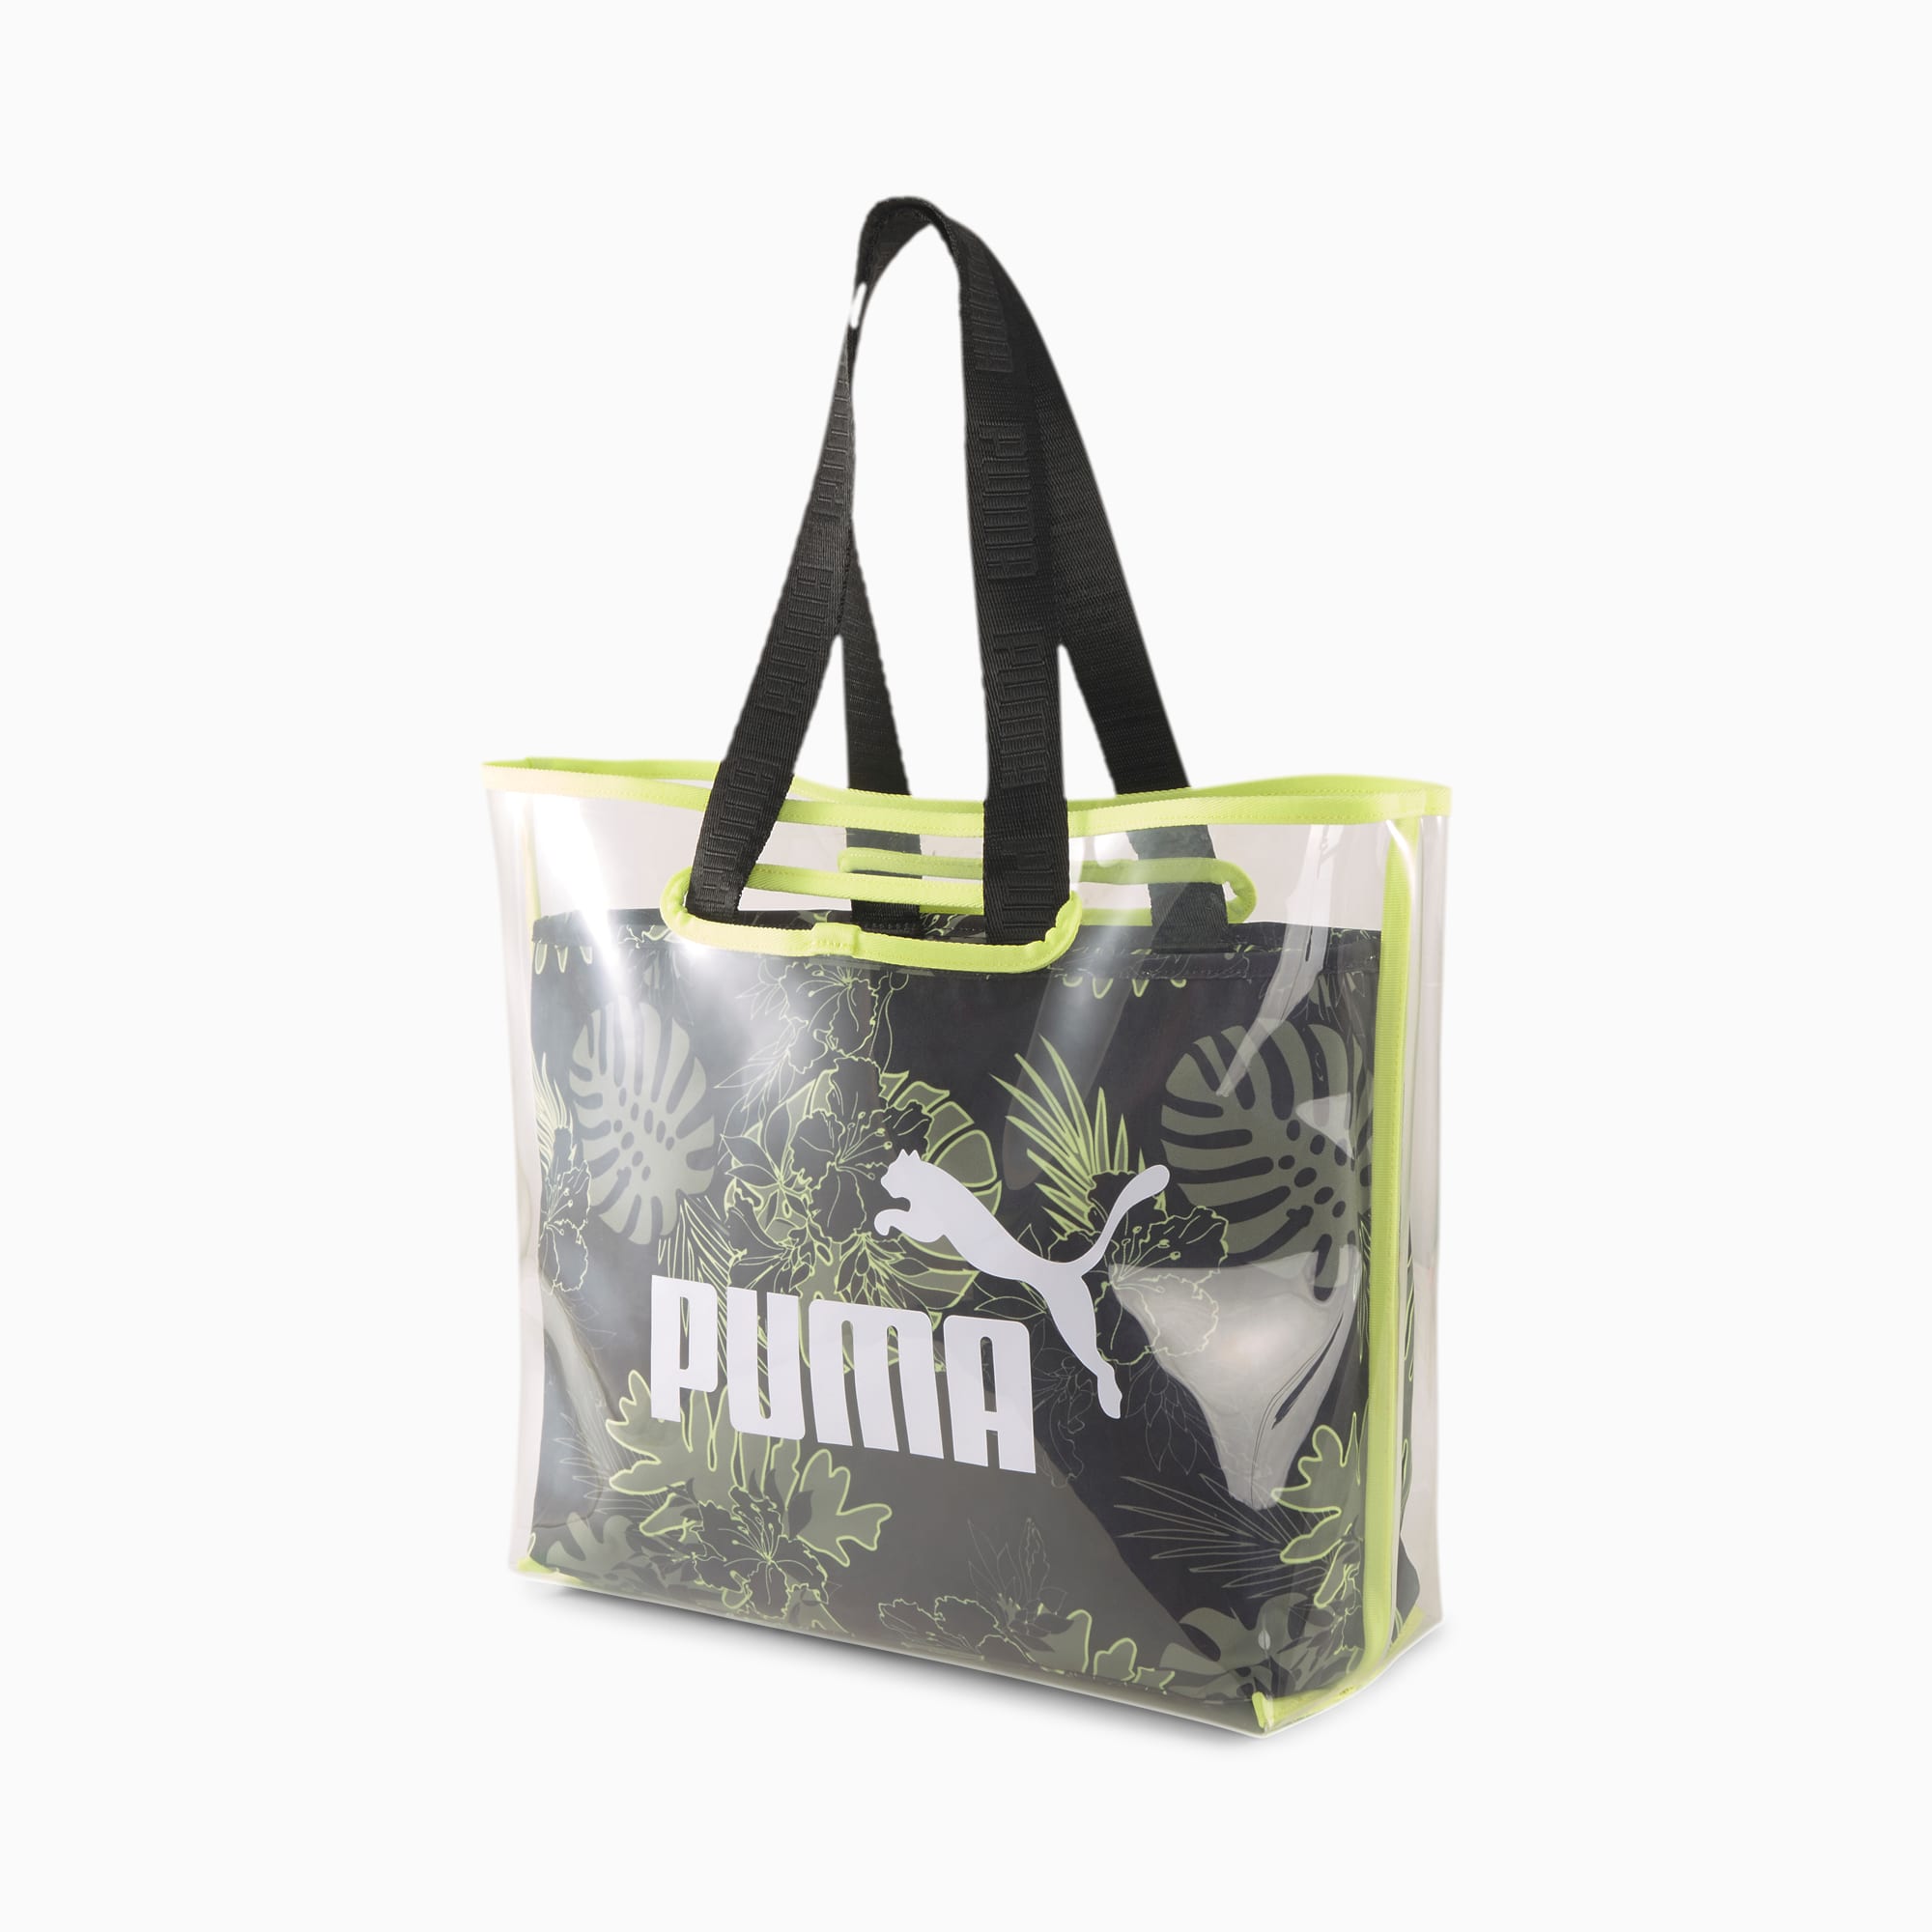 puma core shopper bag